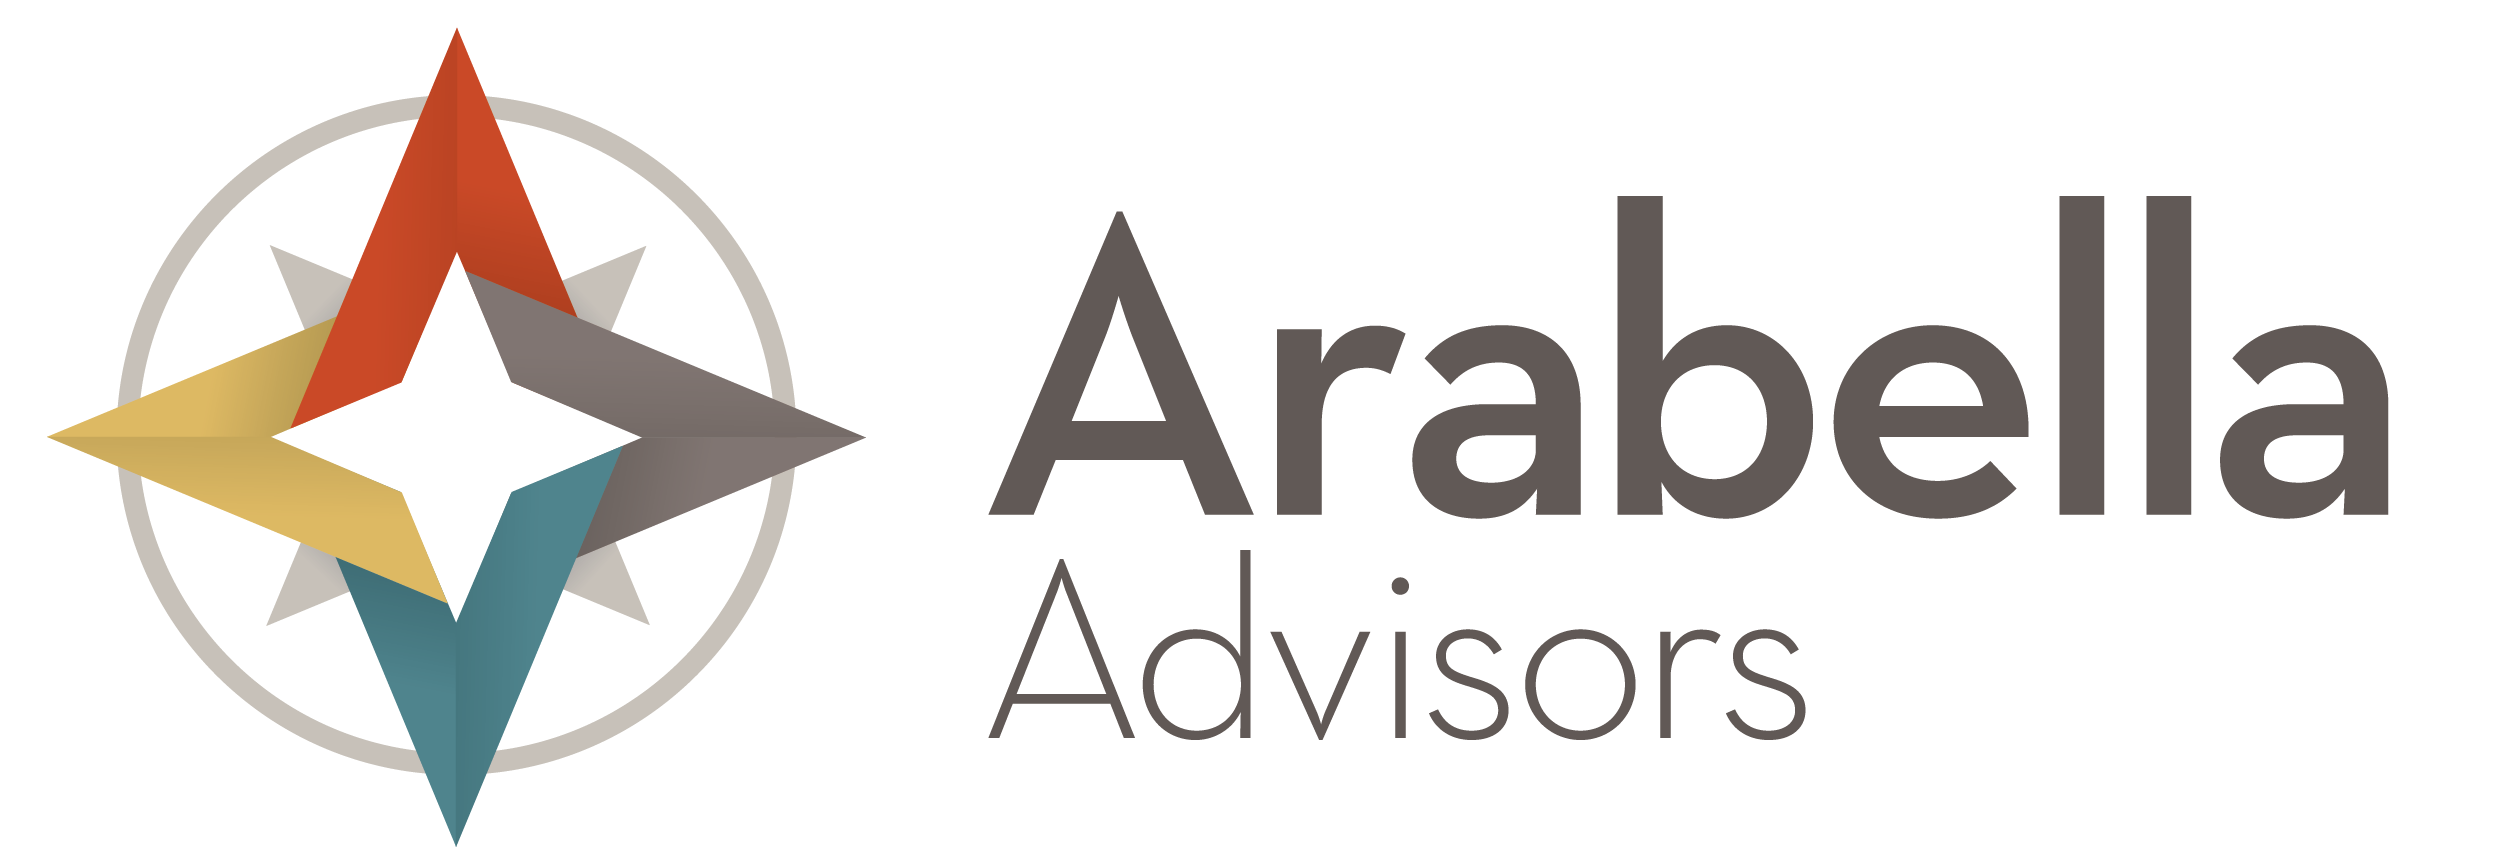 Arabella Advisors Co